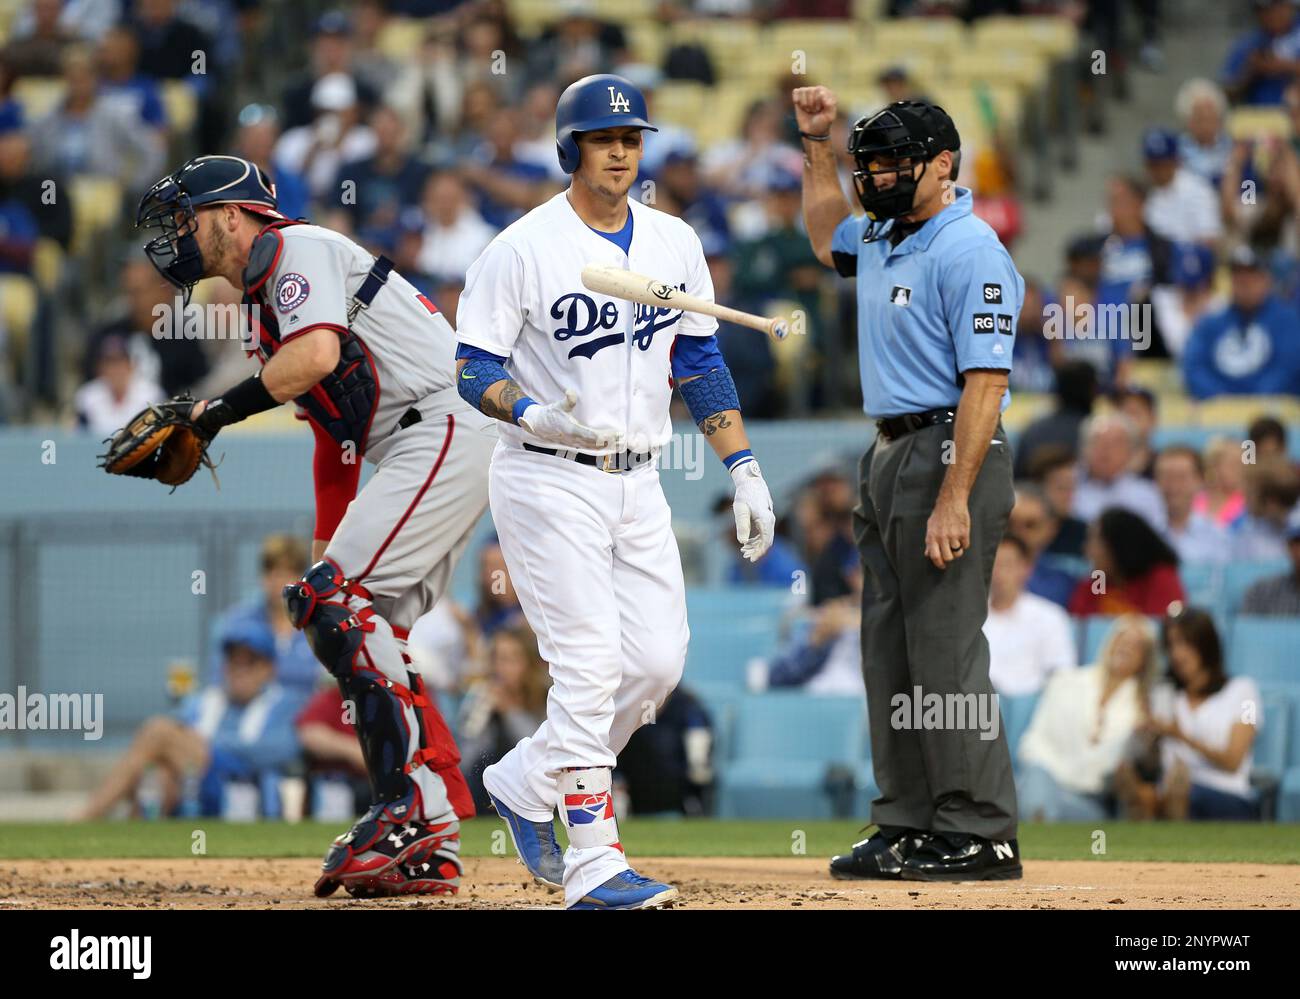 LOS ANGELES, CA - JUNE 06: Los Angeles Dodgers catcher Yasmani